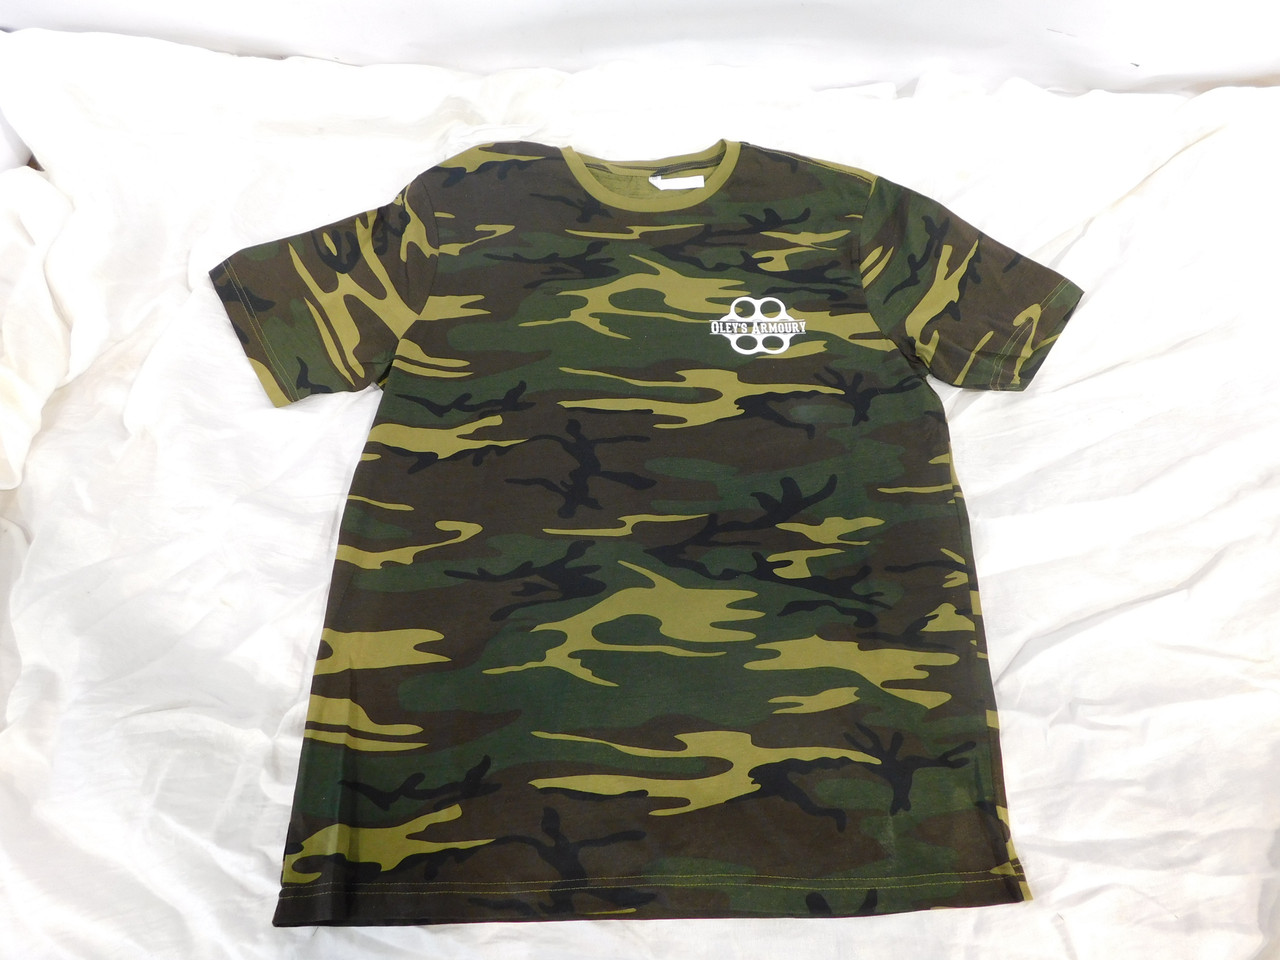 Oley's Armoury T-Shirt Camo - 3X Large